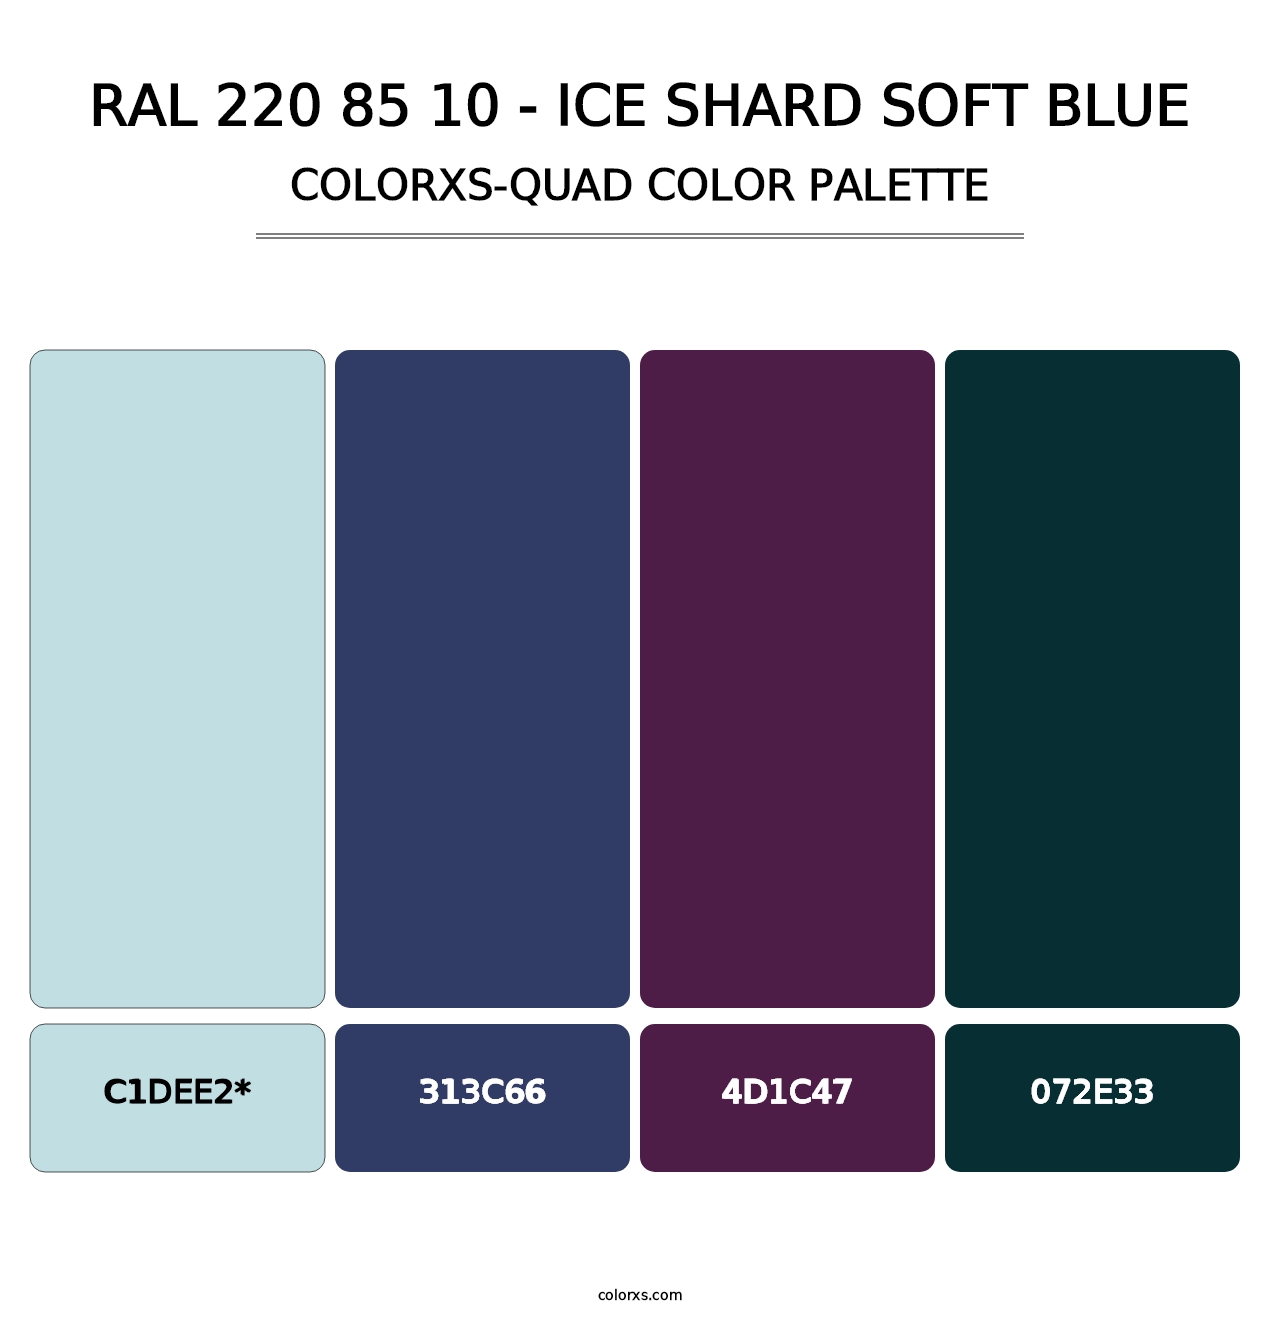 RAL 220 85 10 - Ice Shard Soft Blue - Colorxs Quad Palette